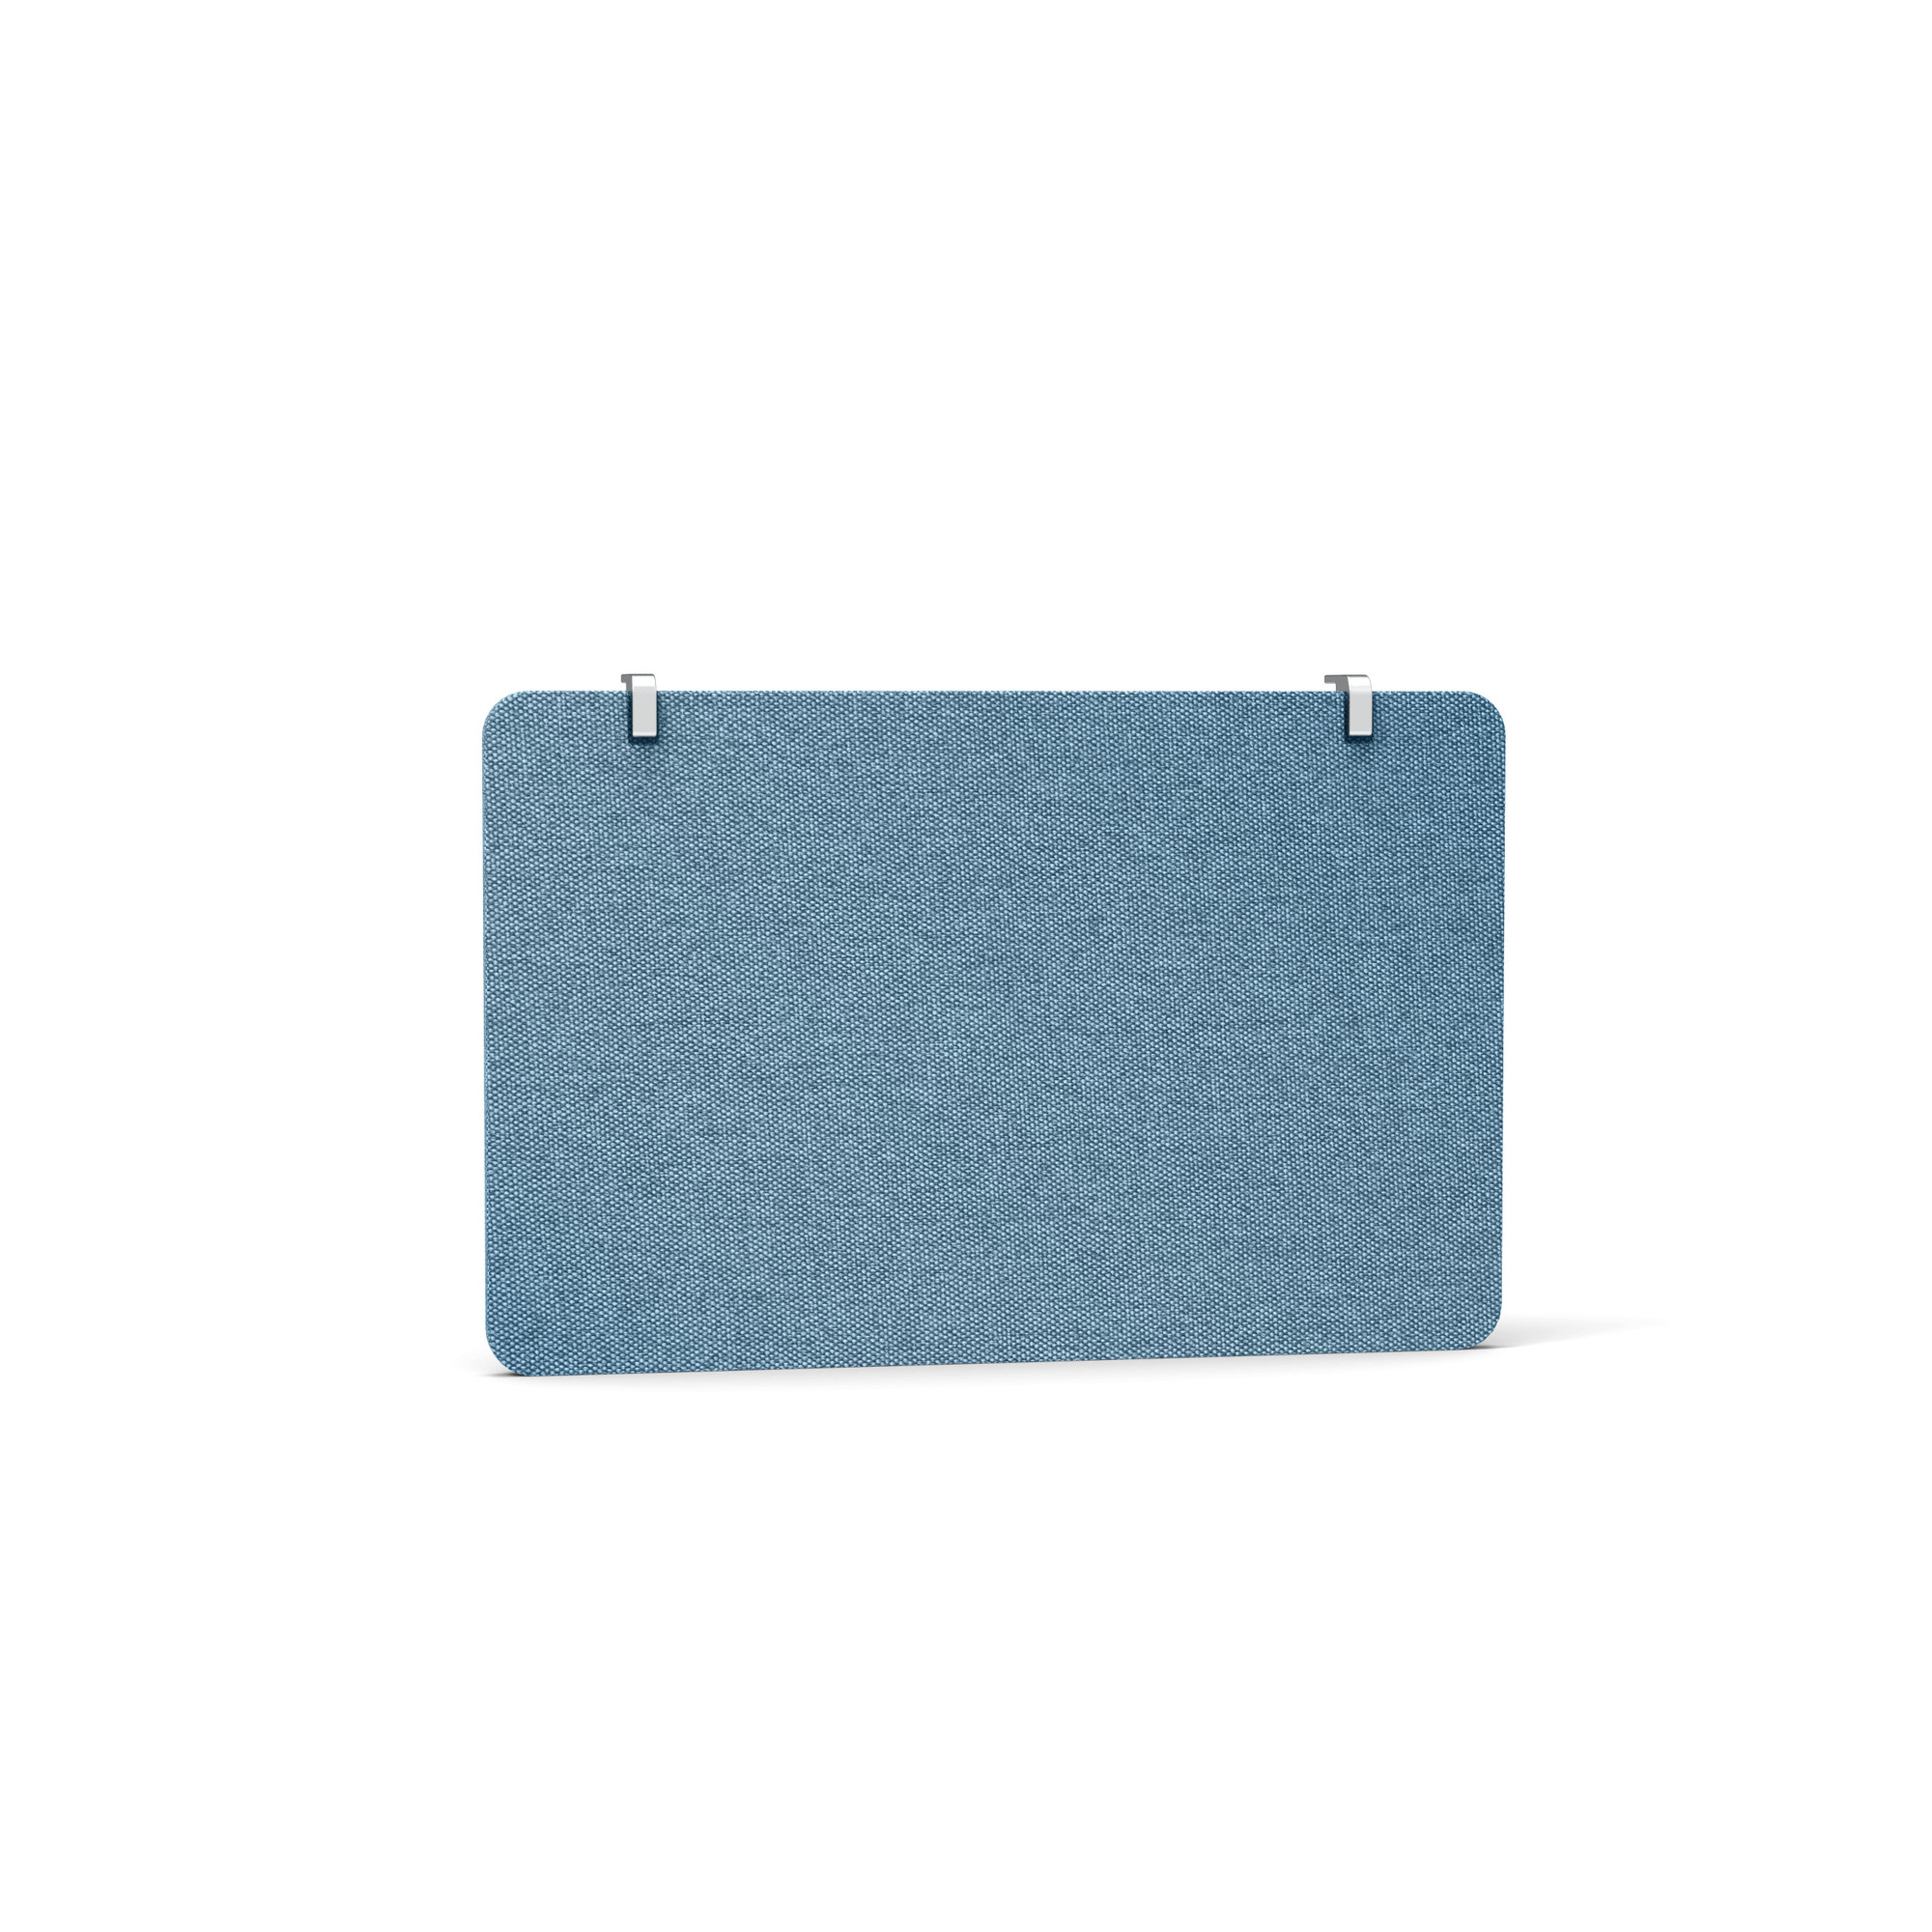 Slate Blue Pinnable Fabric Modesty Panel, 45